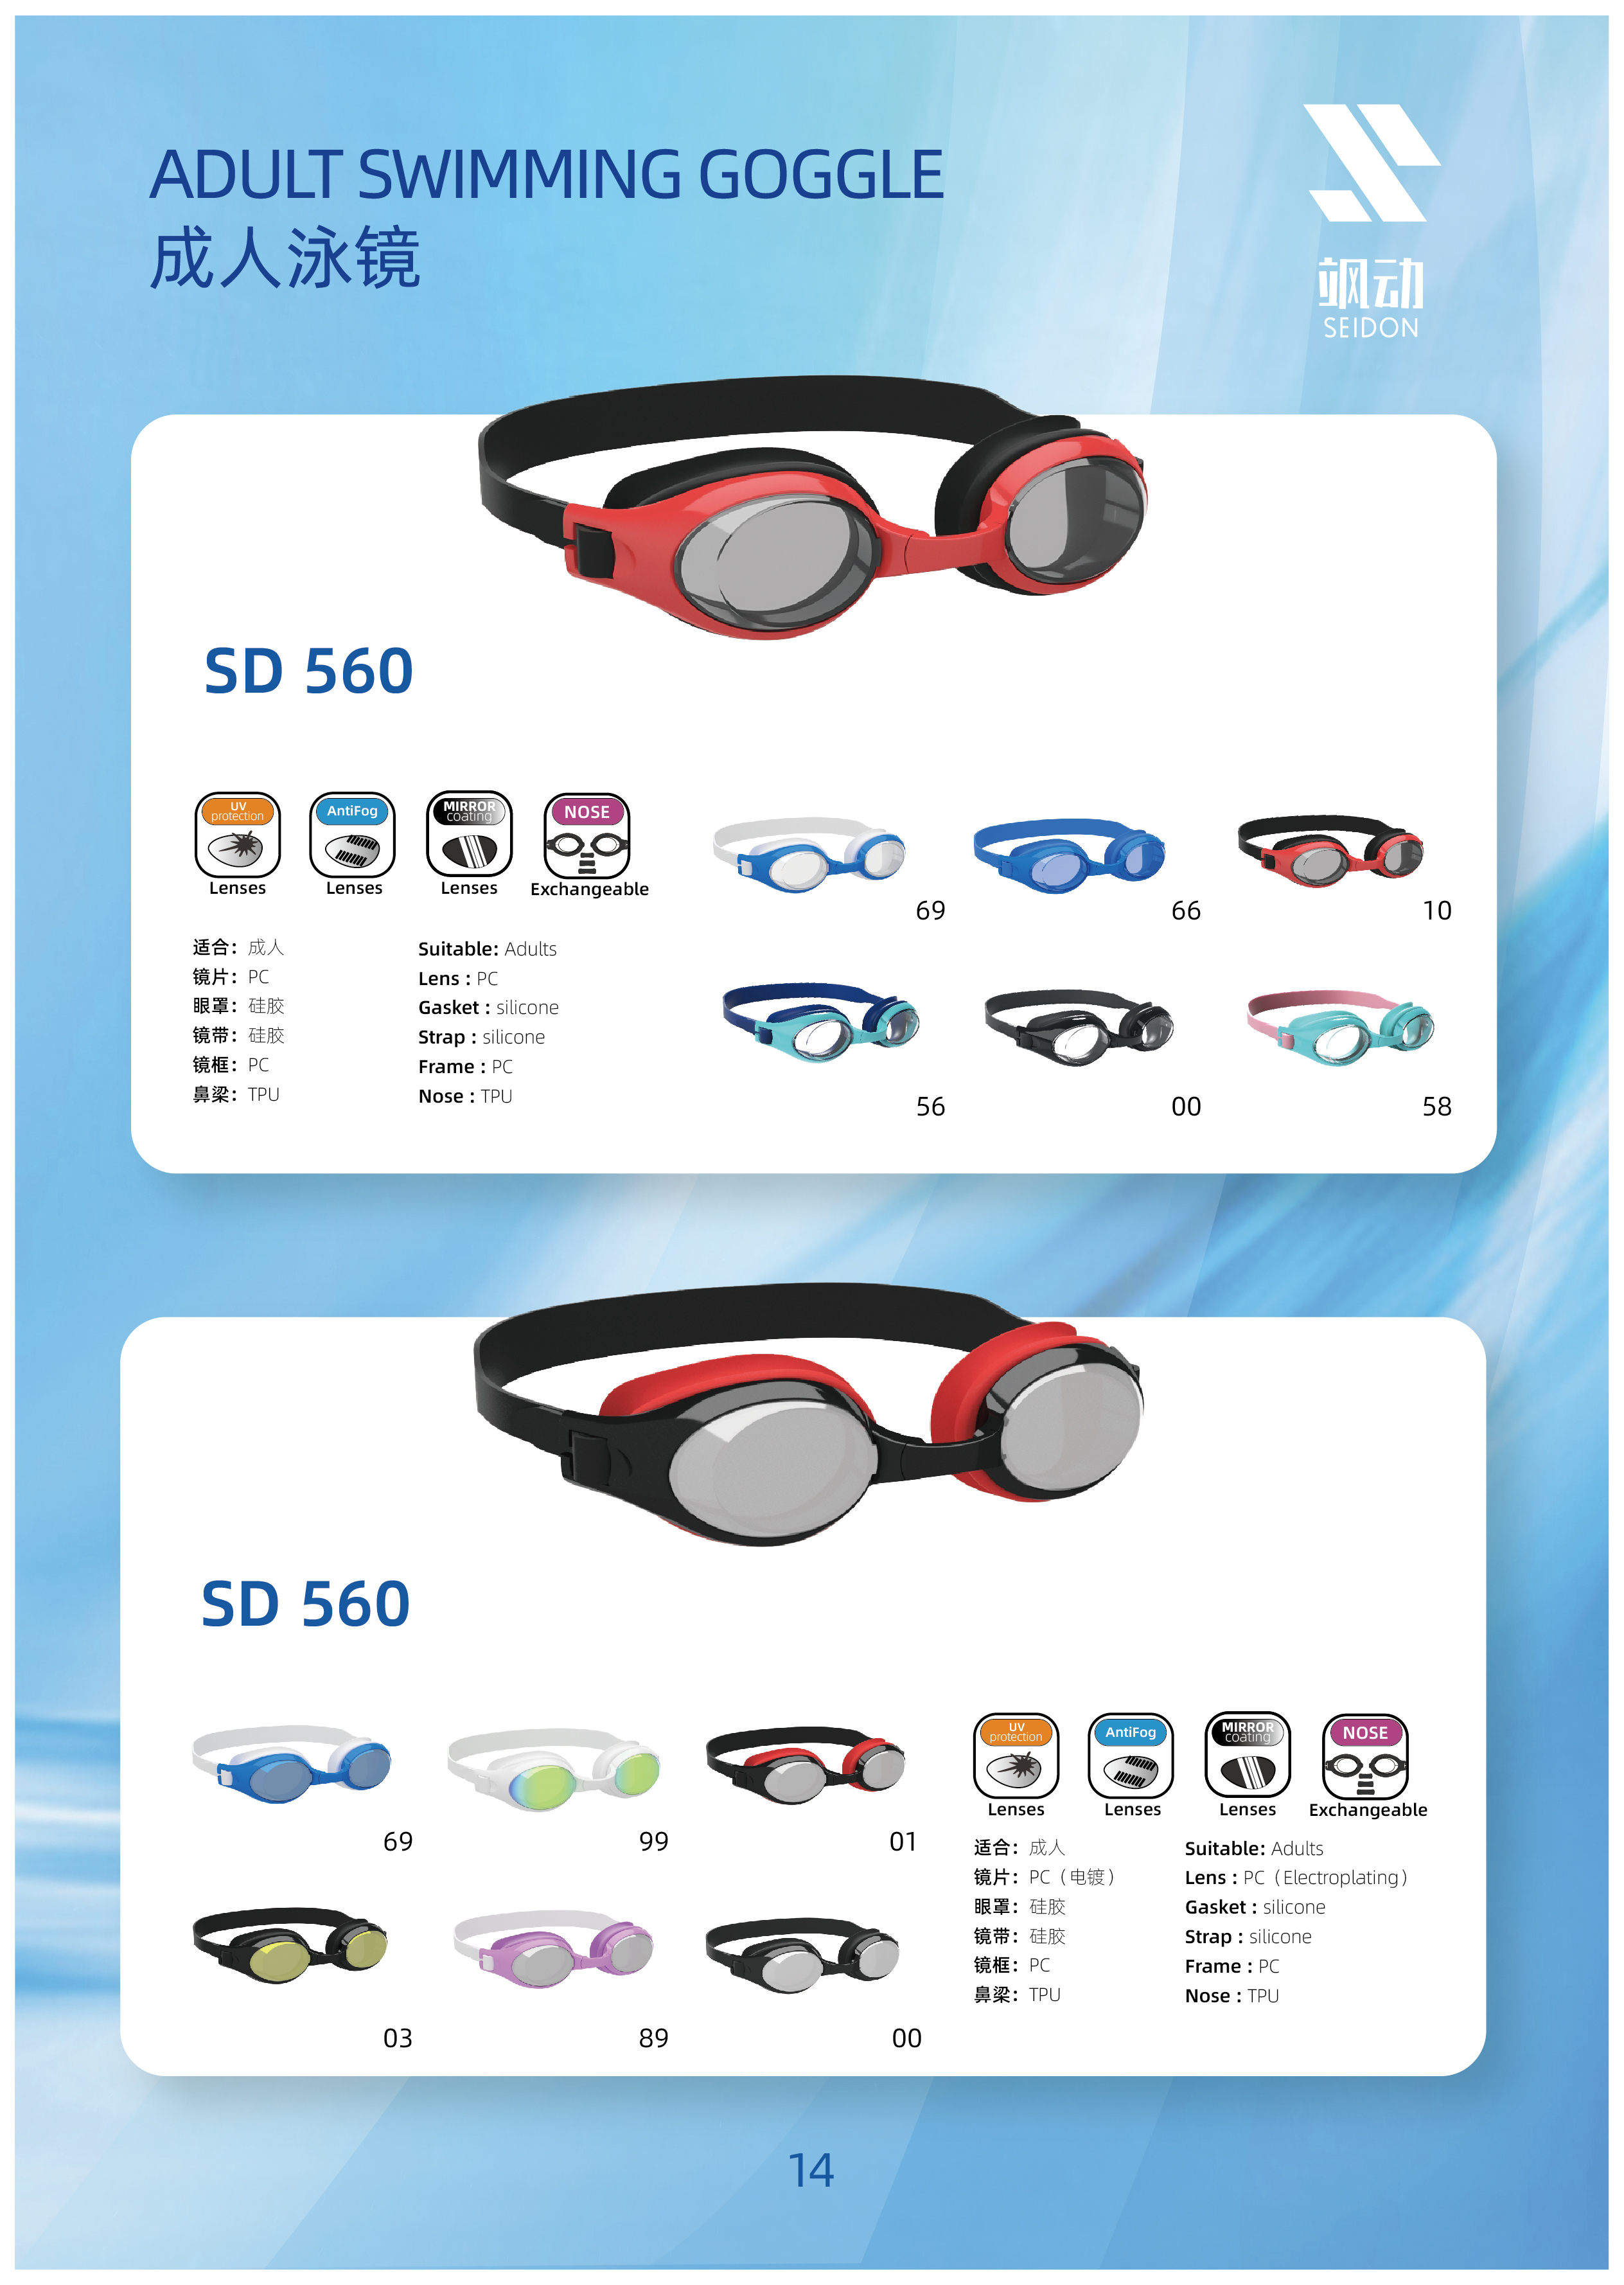 SD Most Fashion Kids Swimming Goggles One-piece frame detachable nose bridge soft child silicone swimming glasses 5600k  